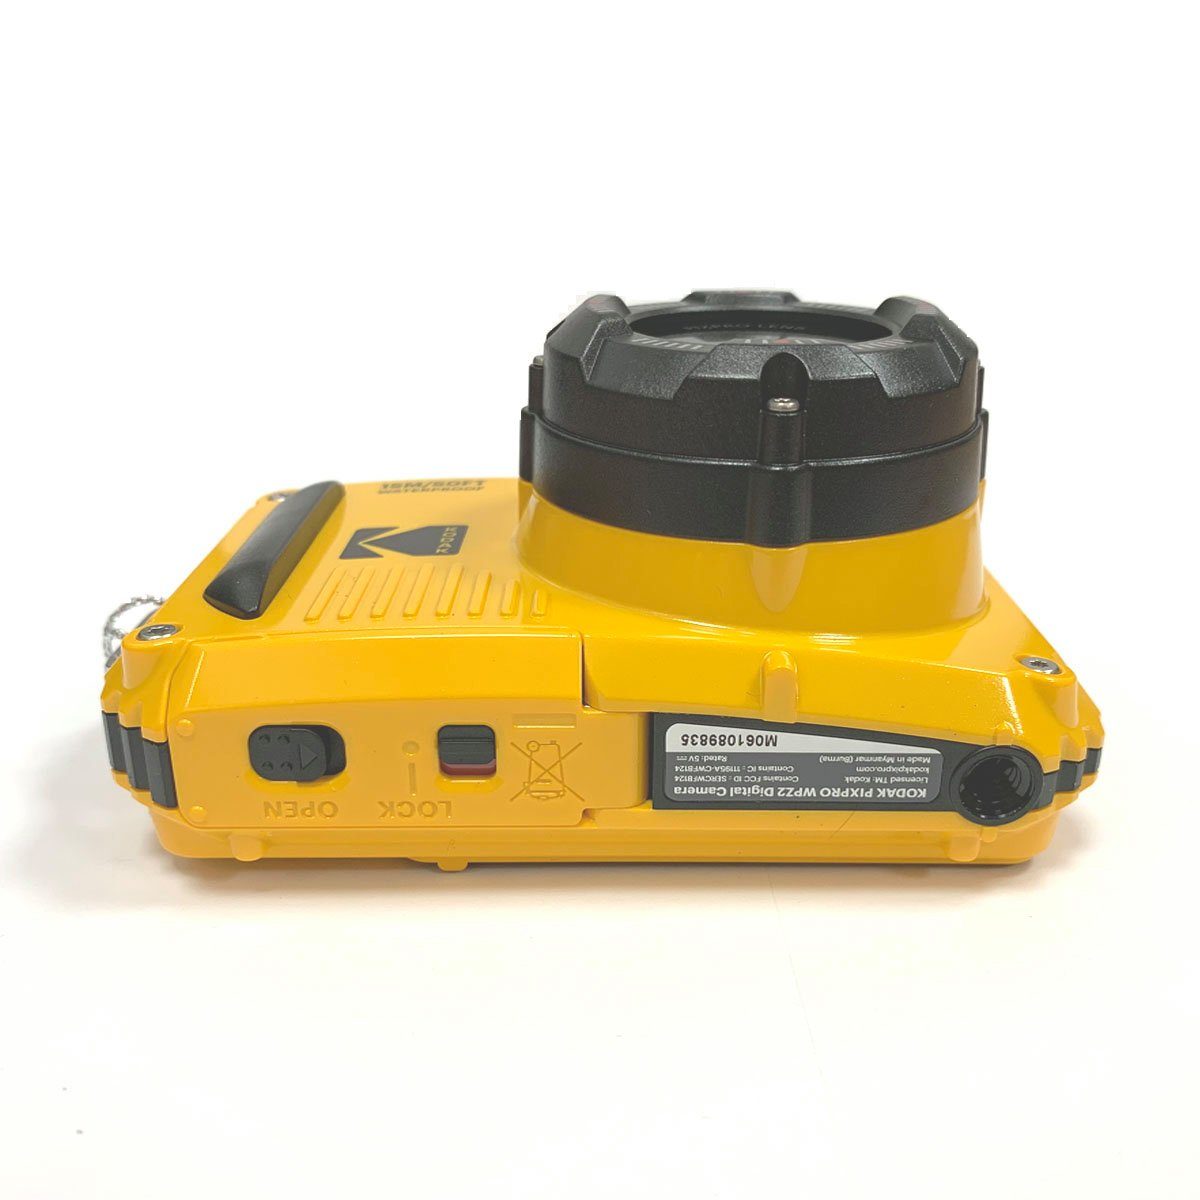 Digitalkamera PixPro Kodak Kompaktkamera WPZ2 gelb